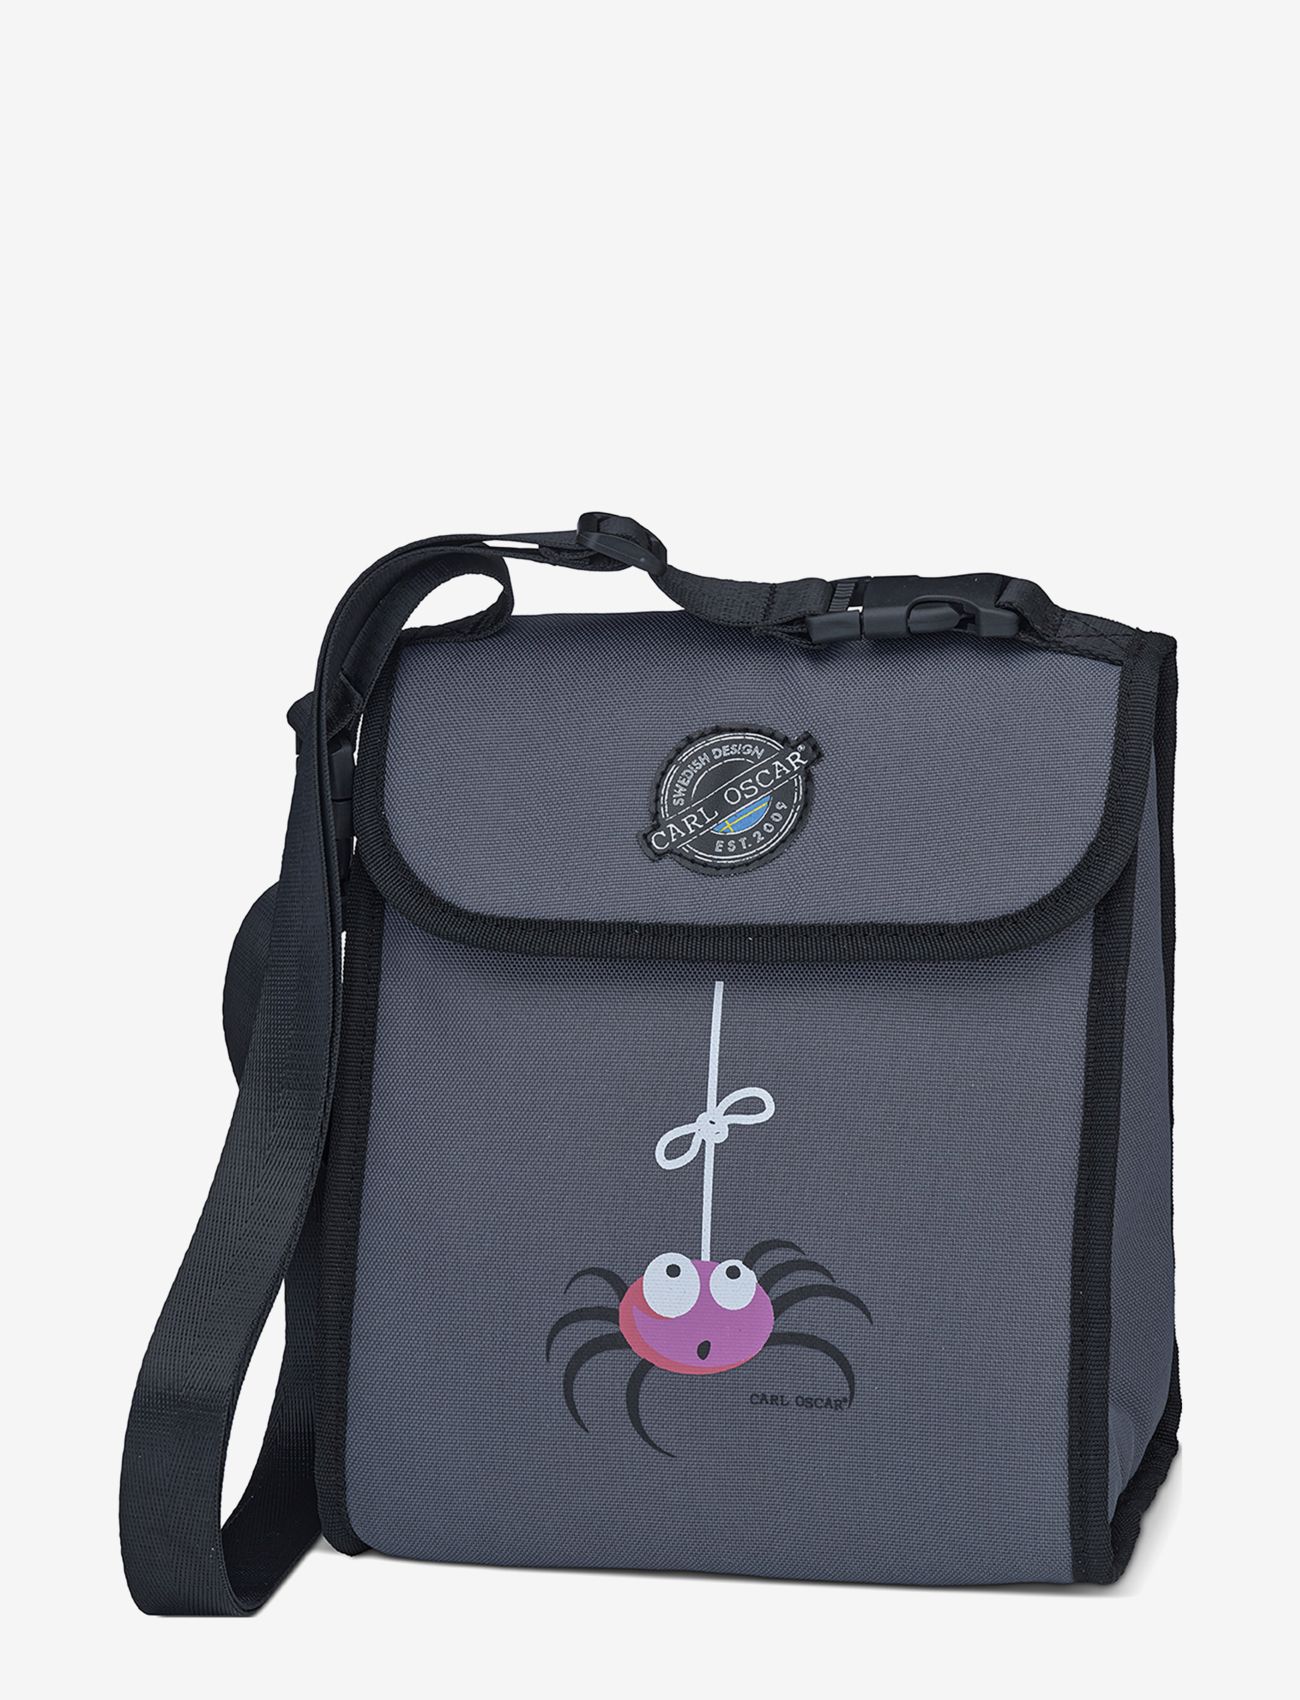 Carl Oscar - Pack n' Snack™ Cooler Bag 5  L - Grey - travel bags - grey - 1